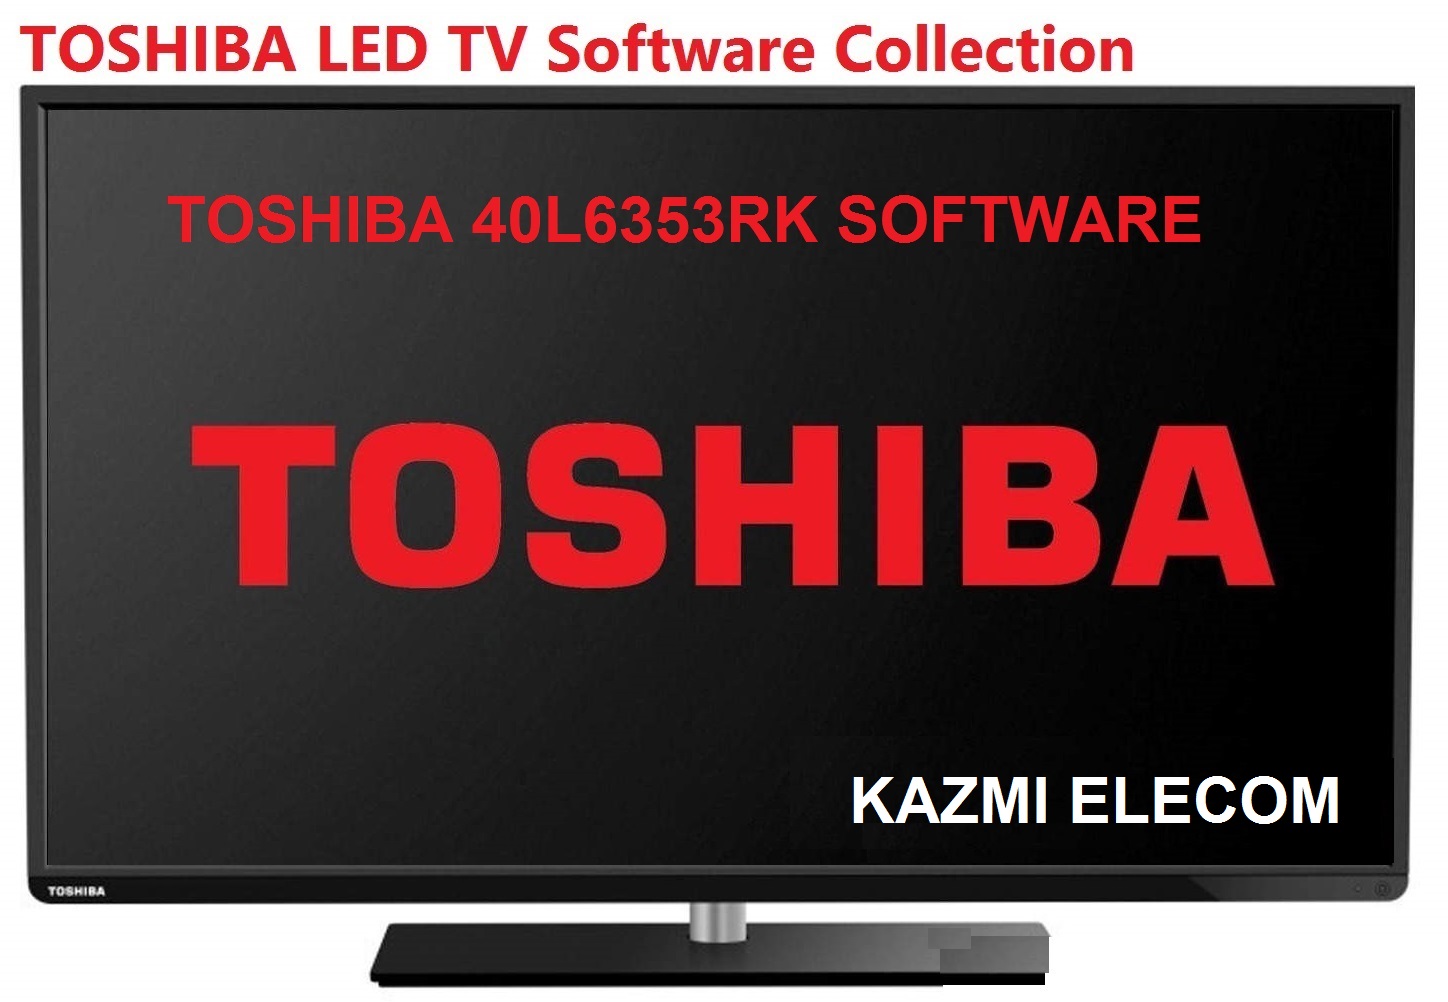 Toshiba 40L6353Rk